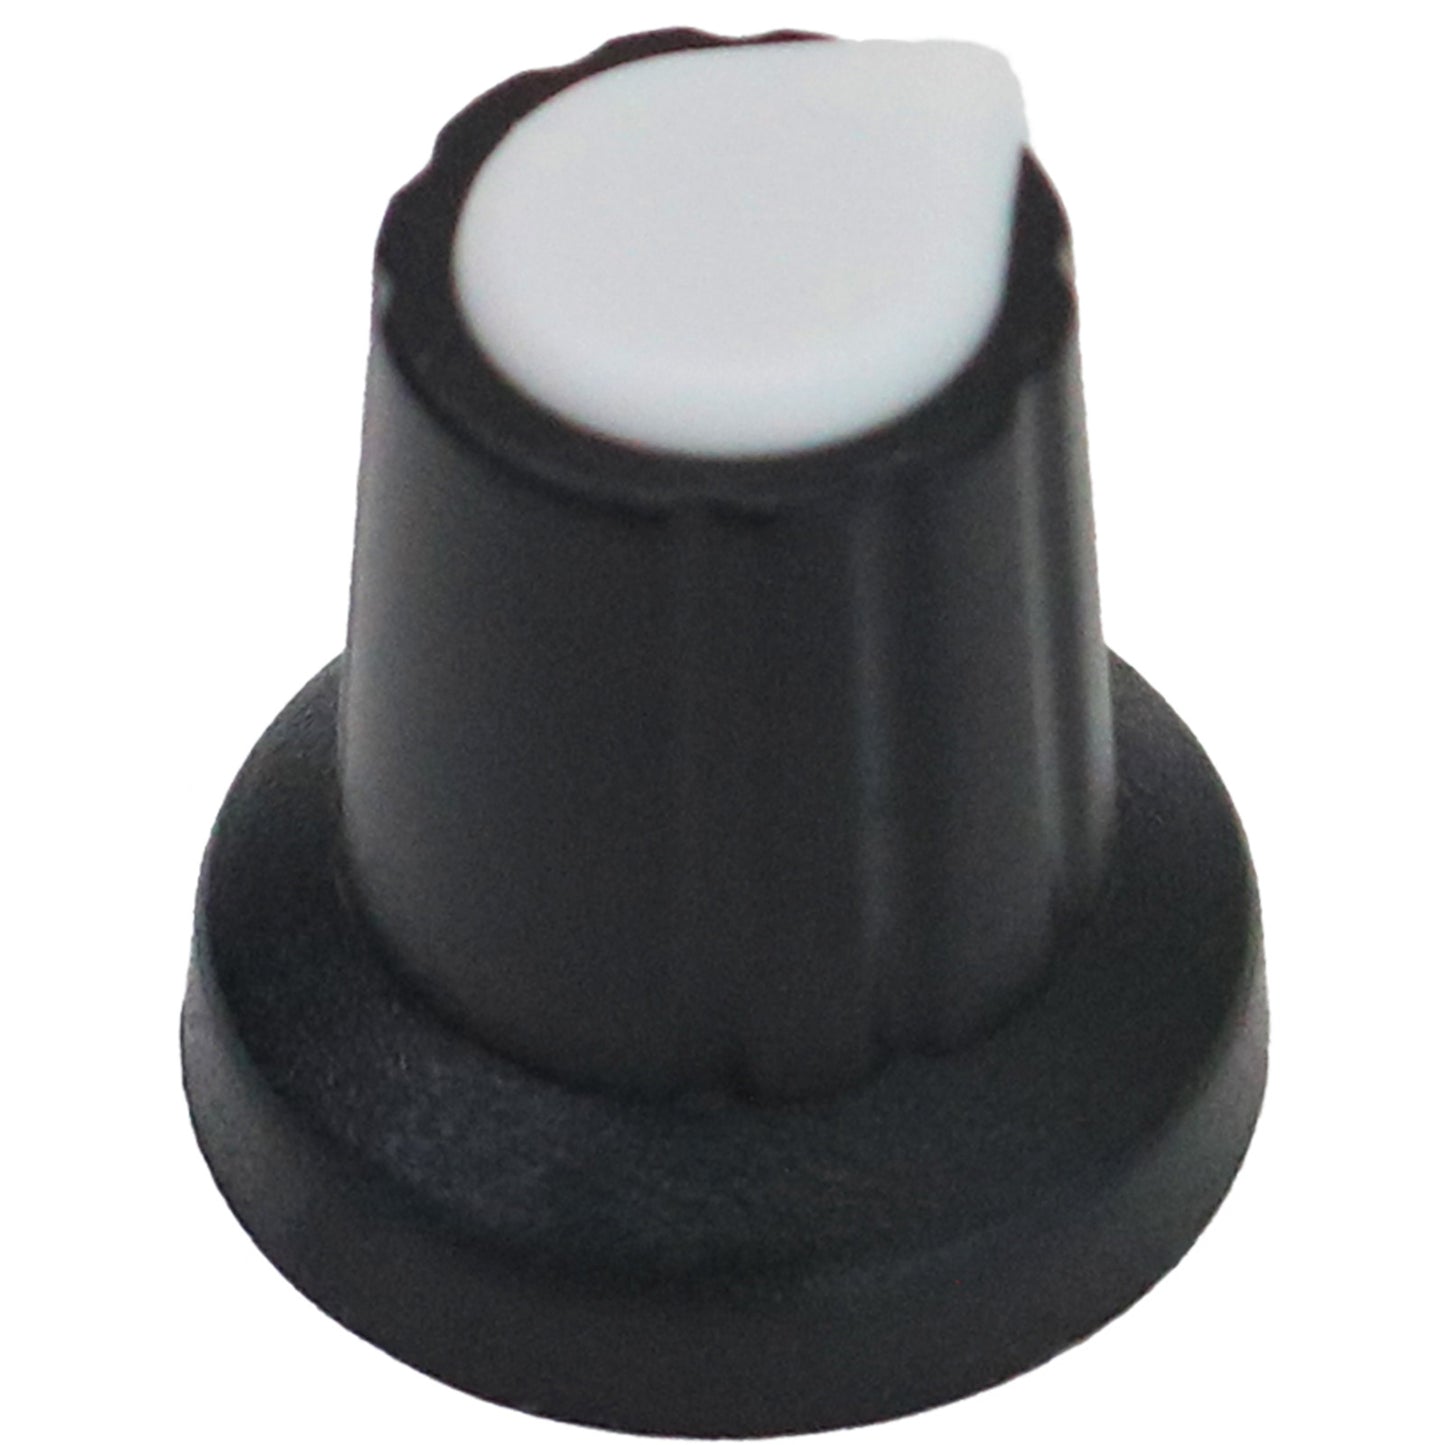 AG2 Plastic Black Body Colour Indicator Standard Control Knob